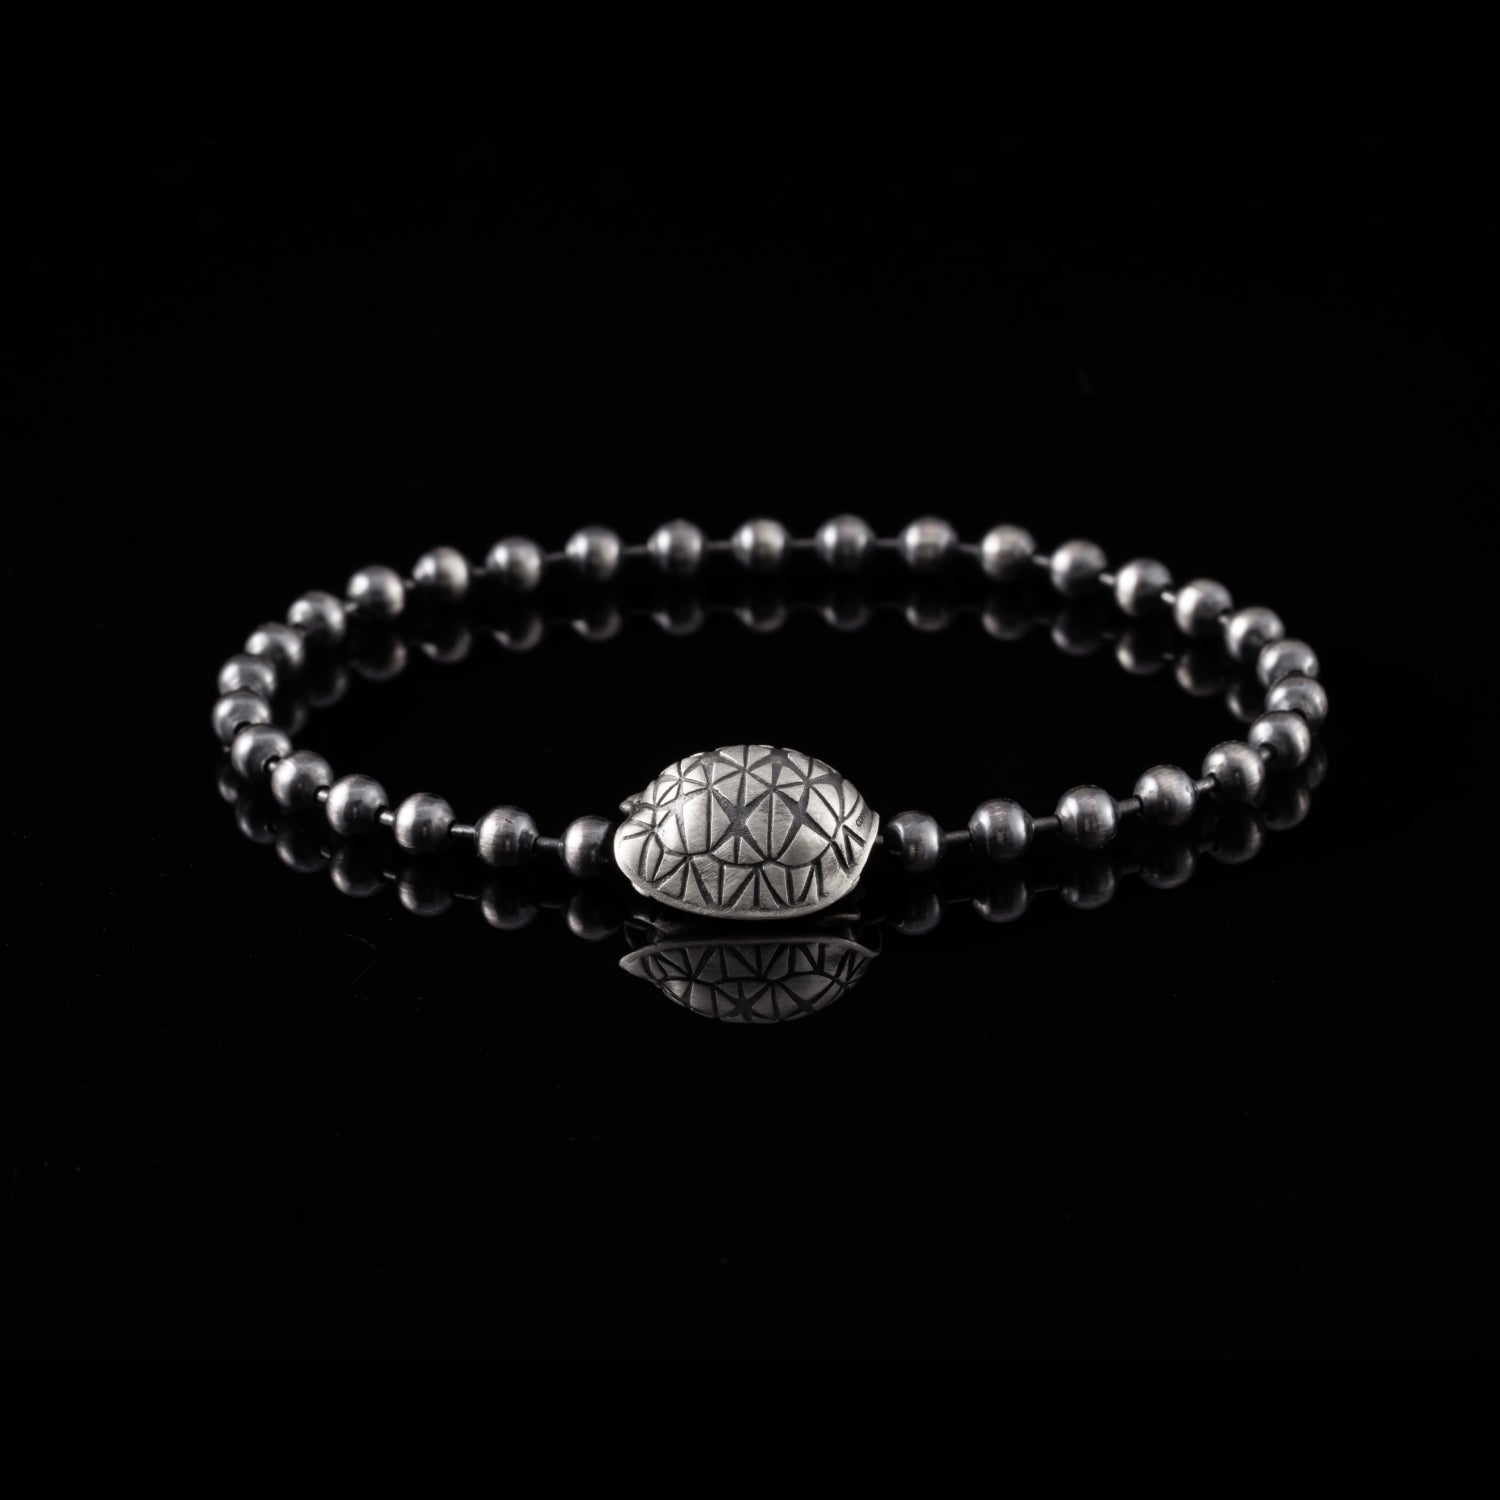 Star Tortoise Ball Chain Bracelet - 4mm Oxidized Silver